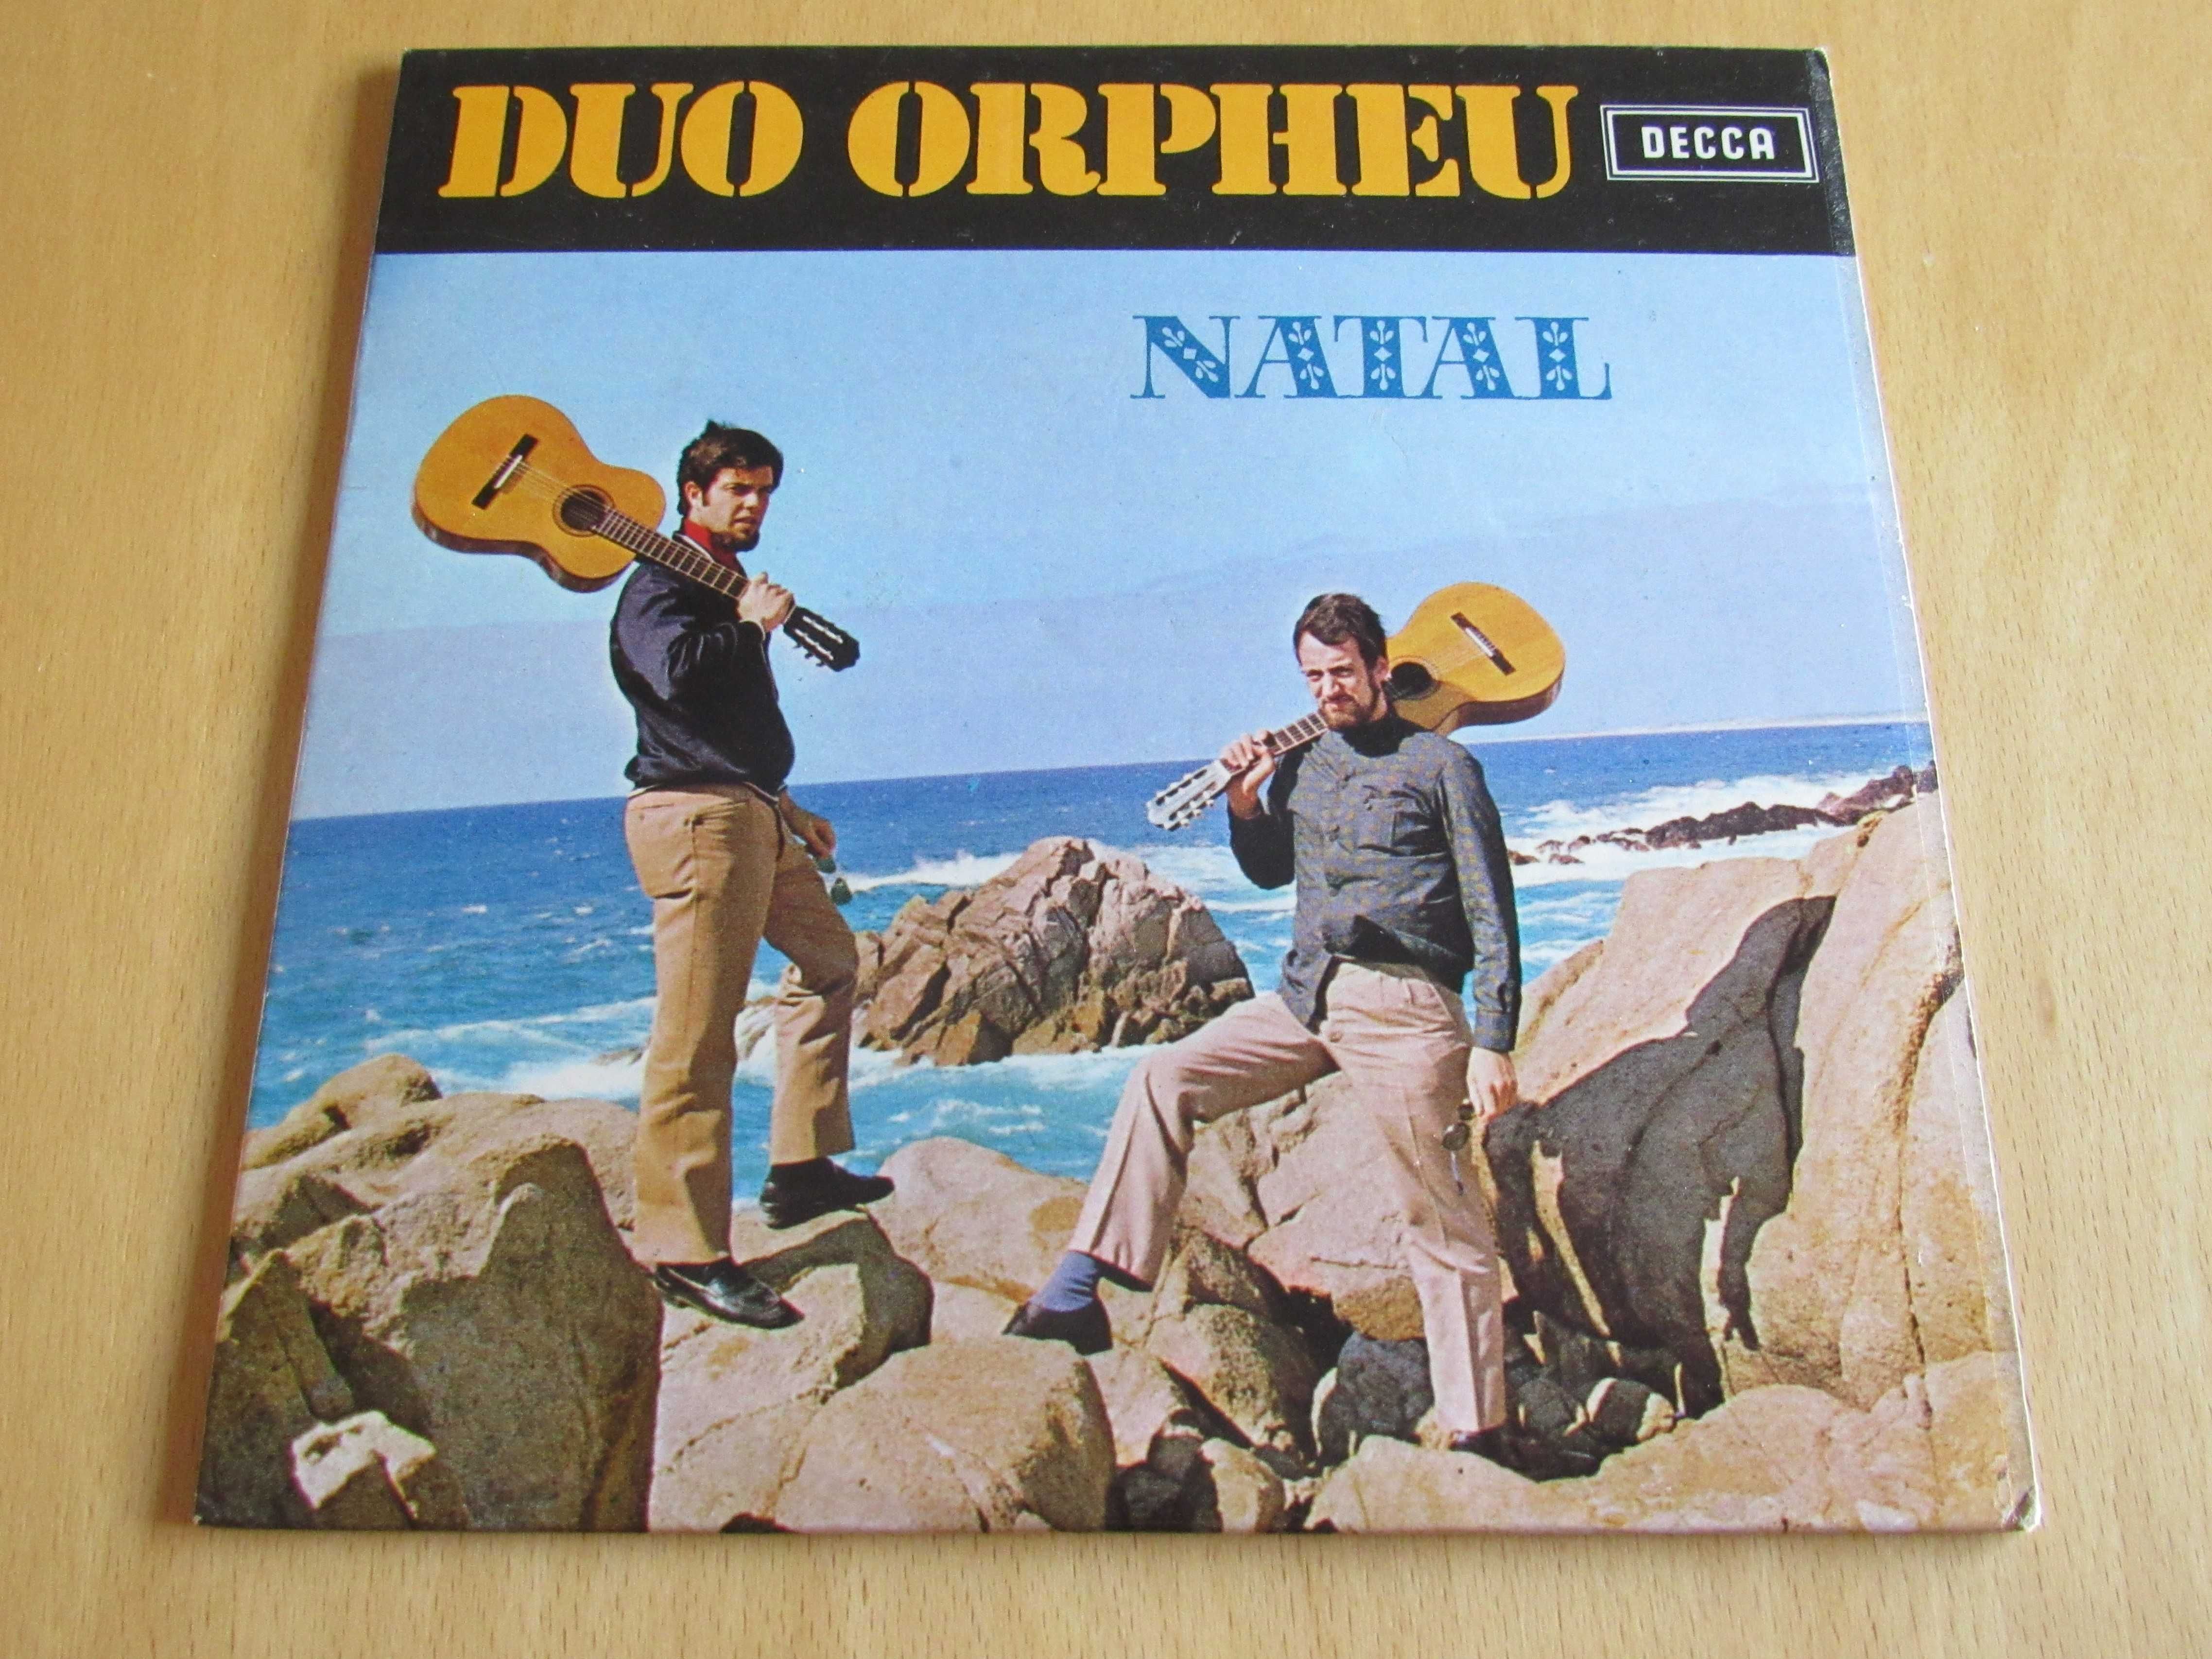 Duo Orpheu, "Natal", Single, EP, Folk, Raro